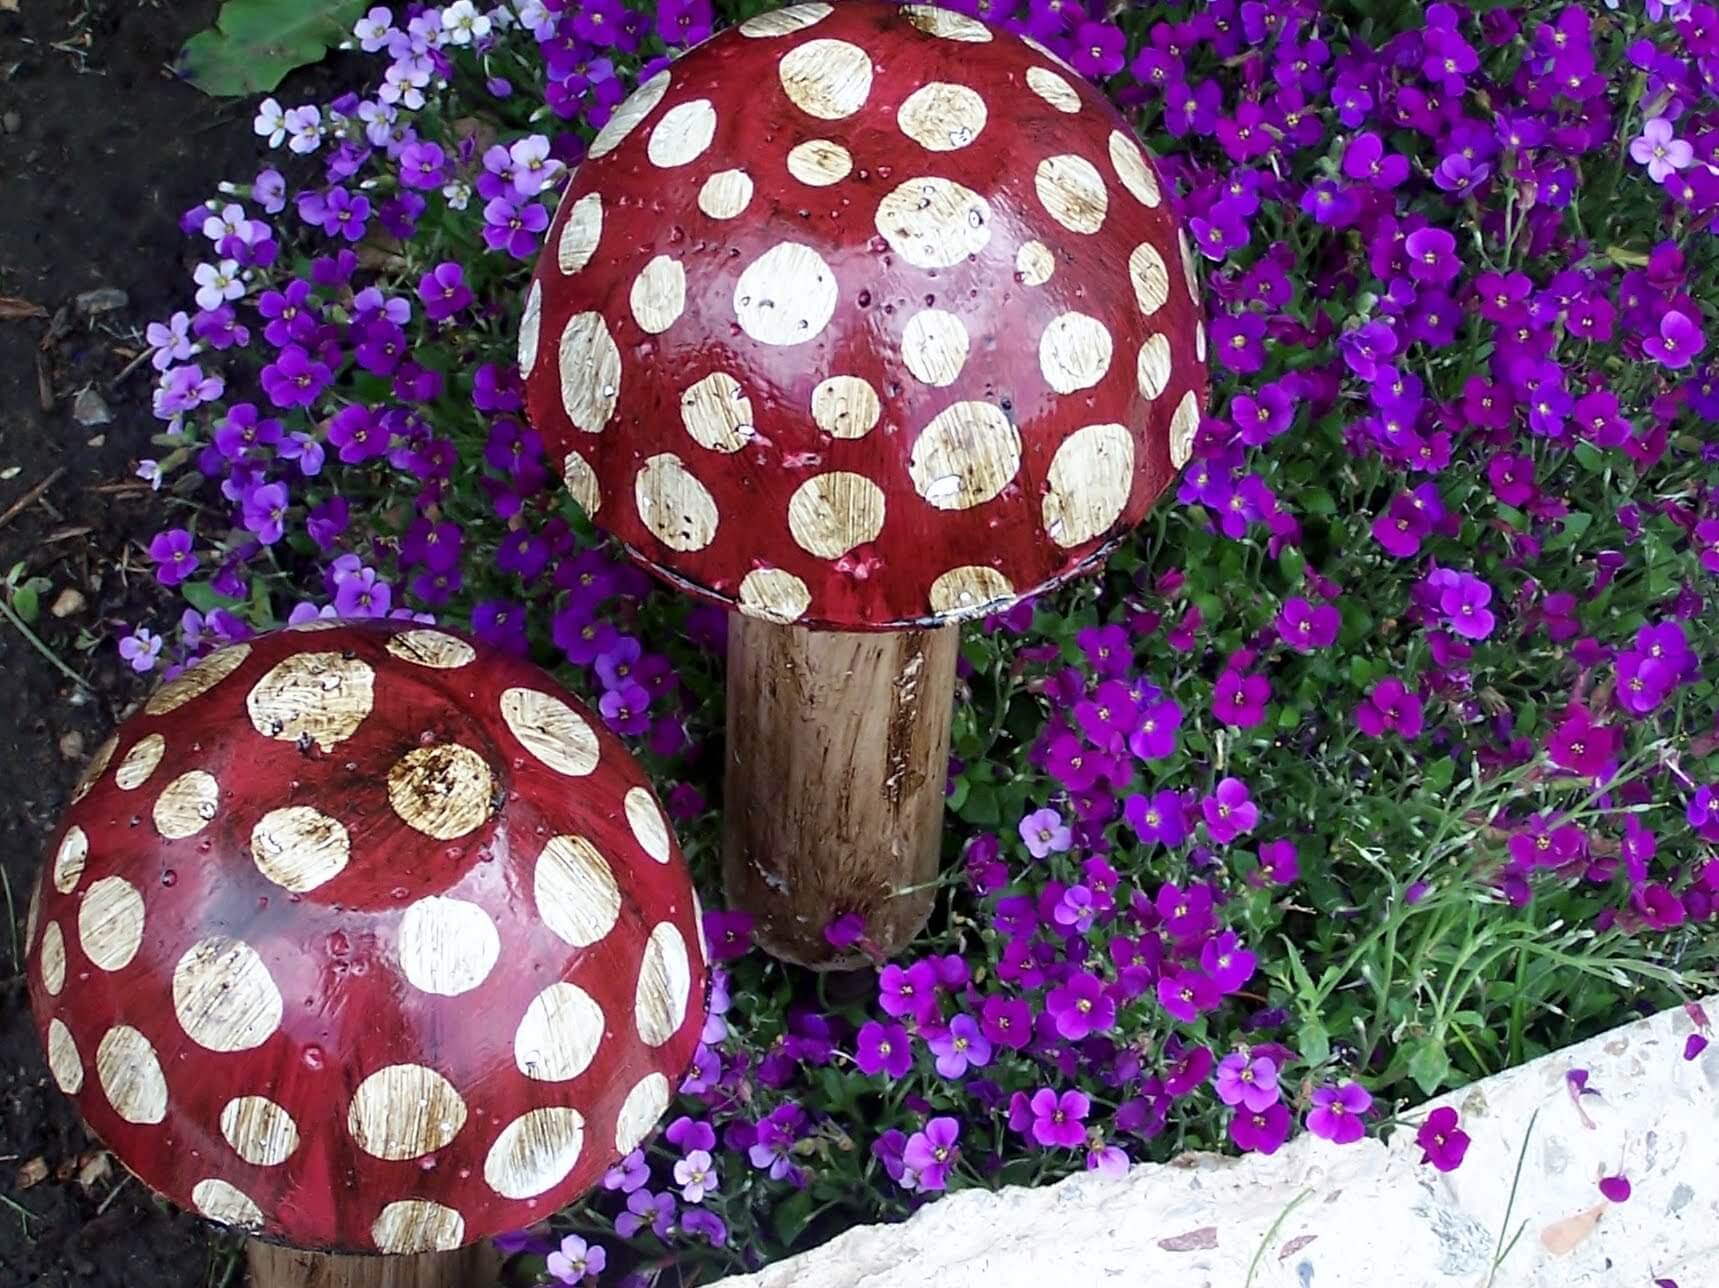 Polka Dot Mushrooms Amongst the Flowers | DIY Painted Garden Decoration Ideas